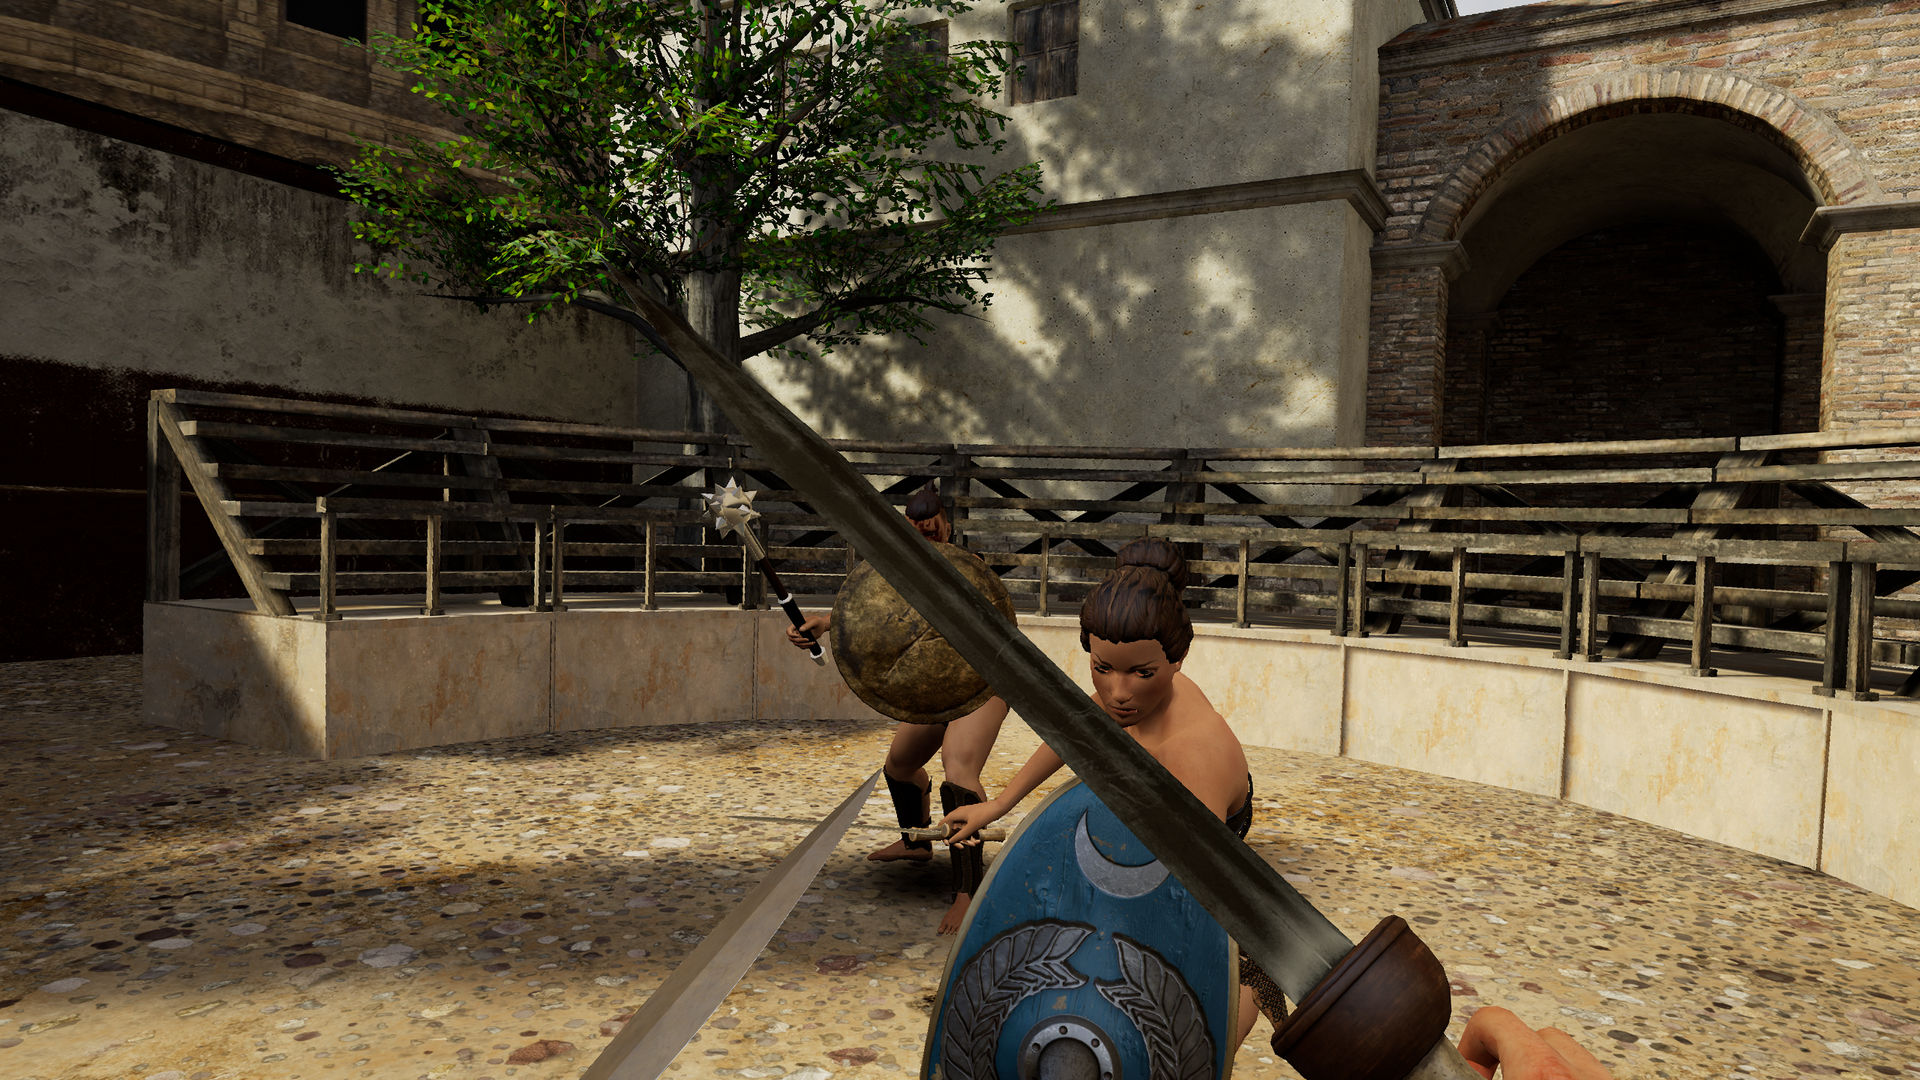 Gladius  Gladiator VR Sword fighting on Steam